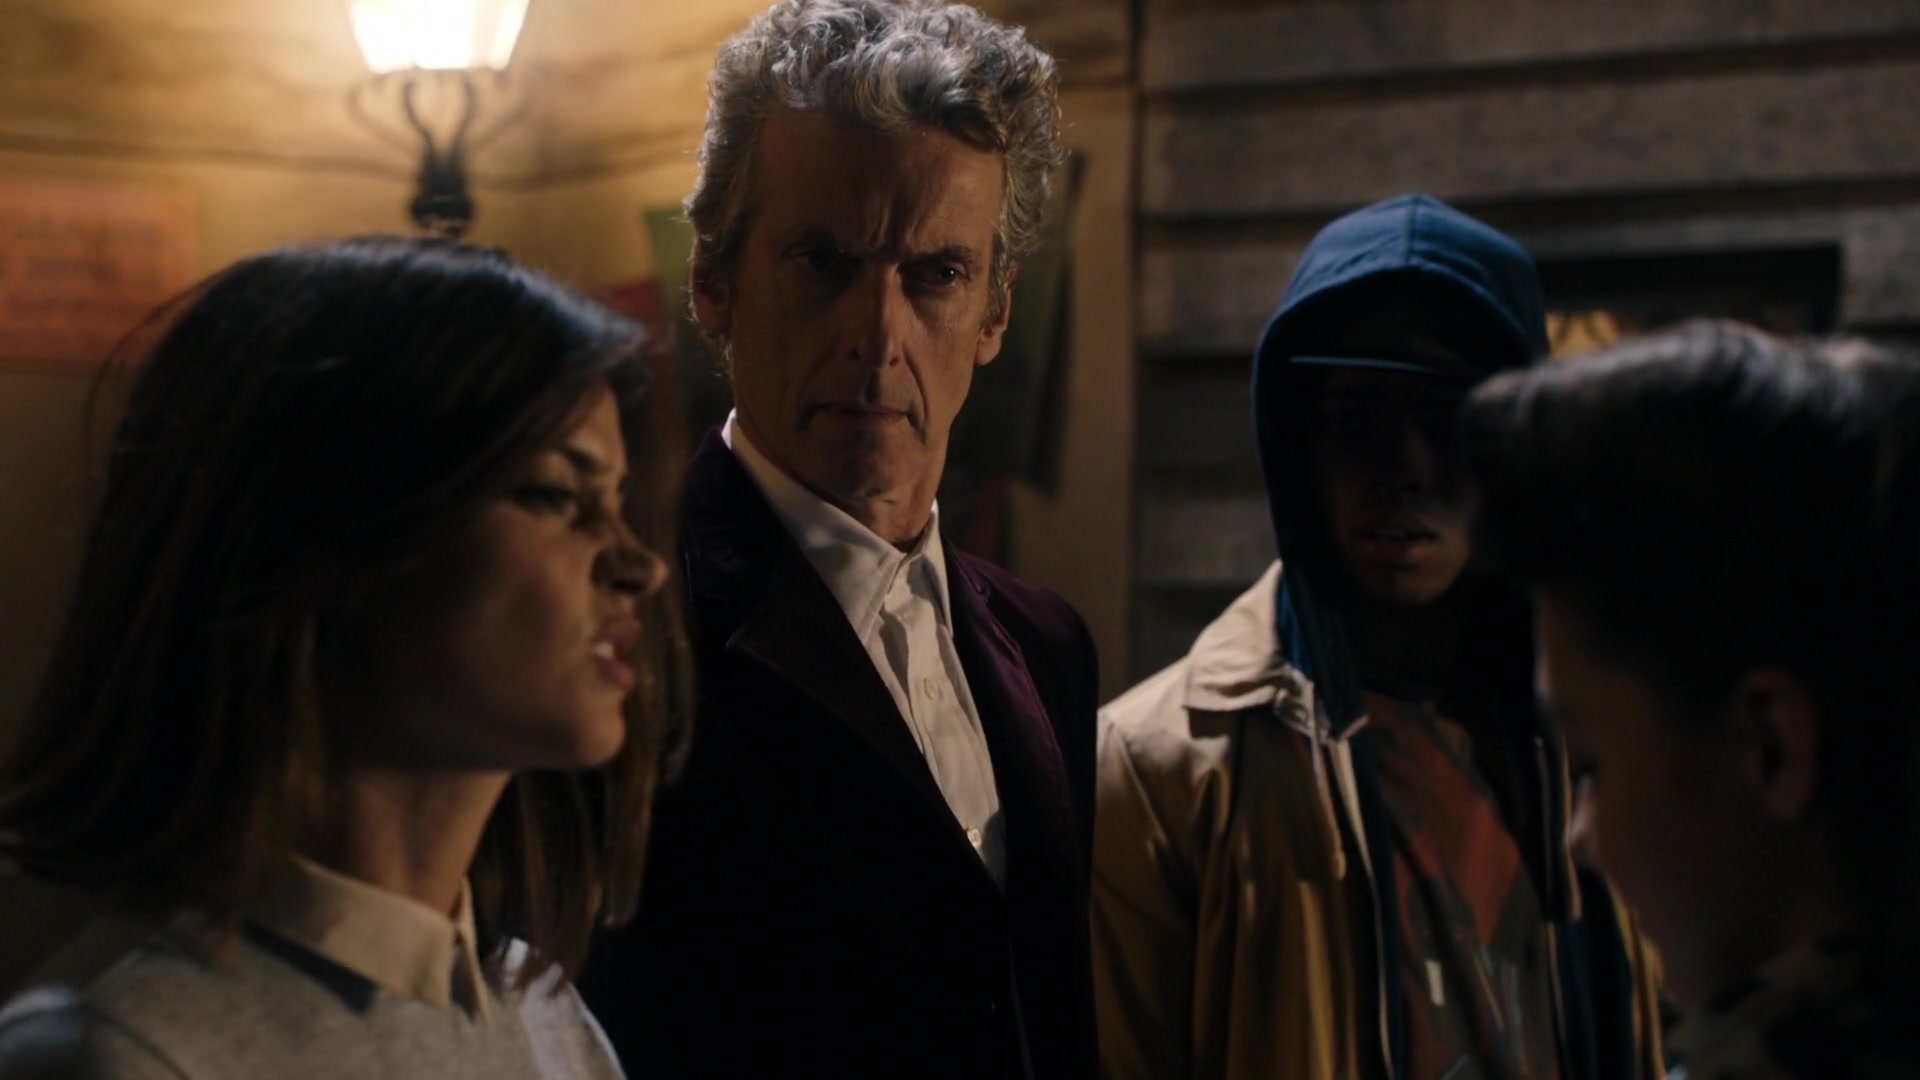 Doctor_Who_9x10-Sleep_No_More_0300.jpg